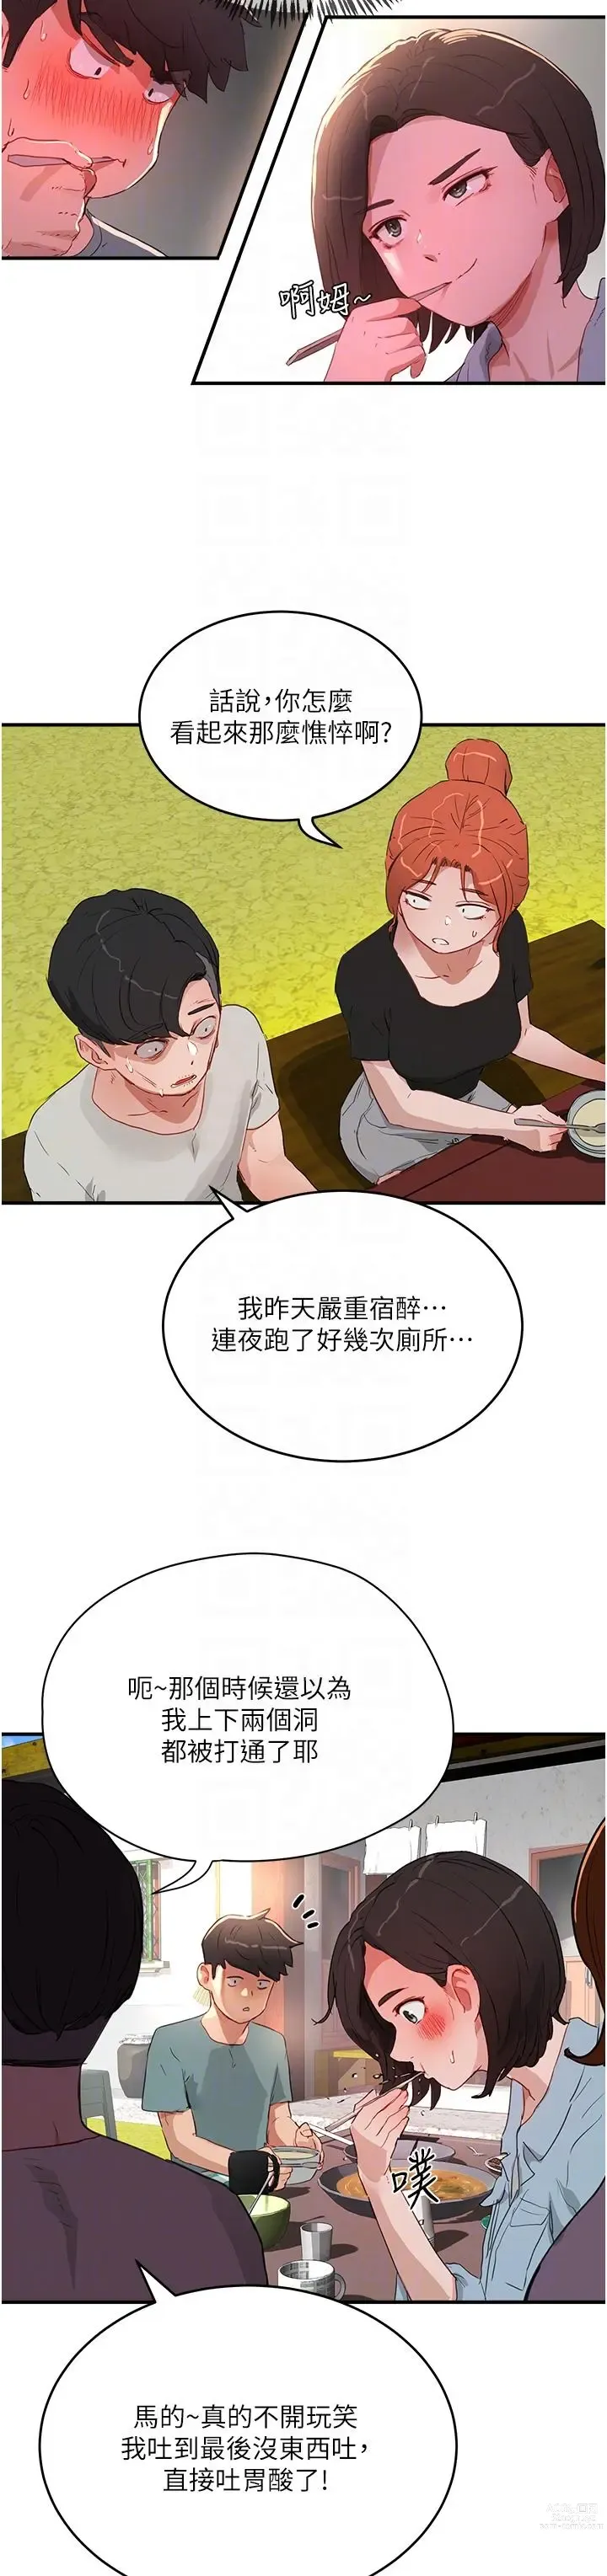 Page 19 of manga 夏日深处/Summer of Love 61-76